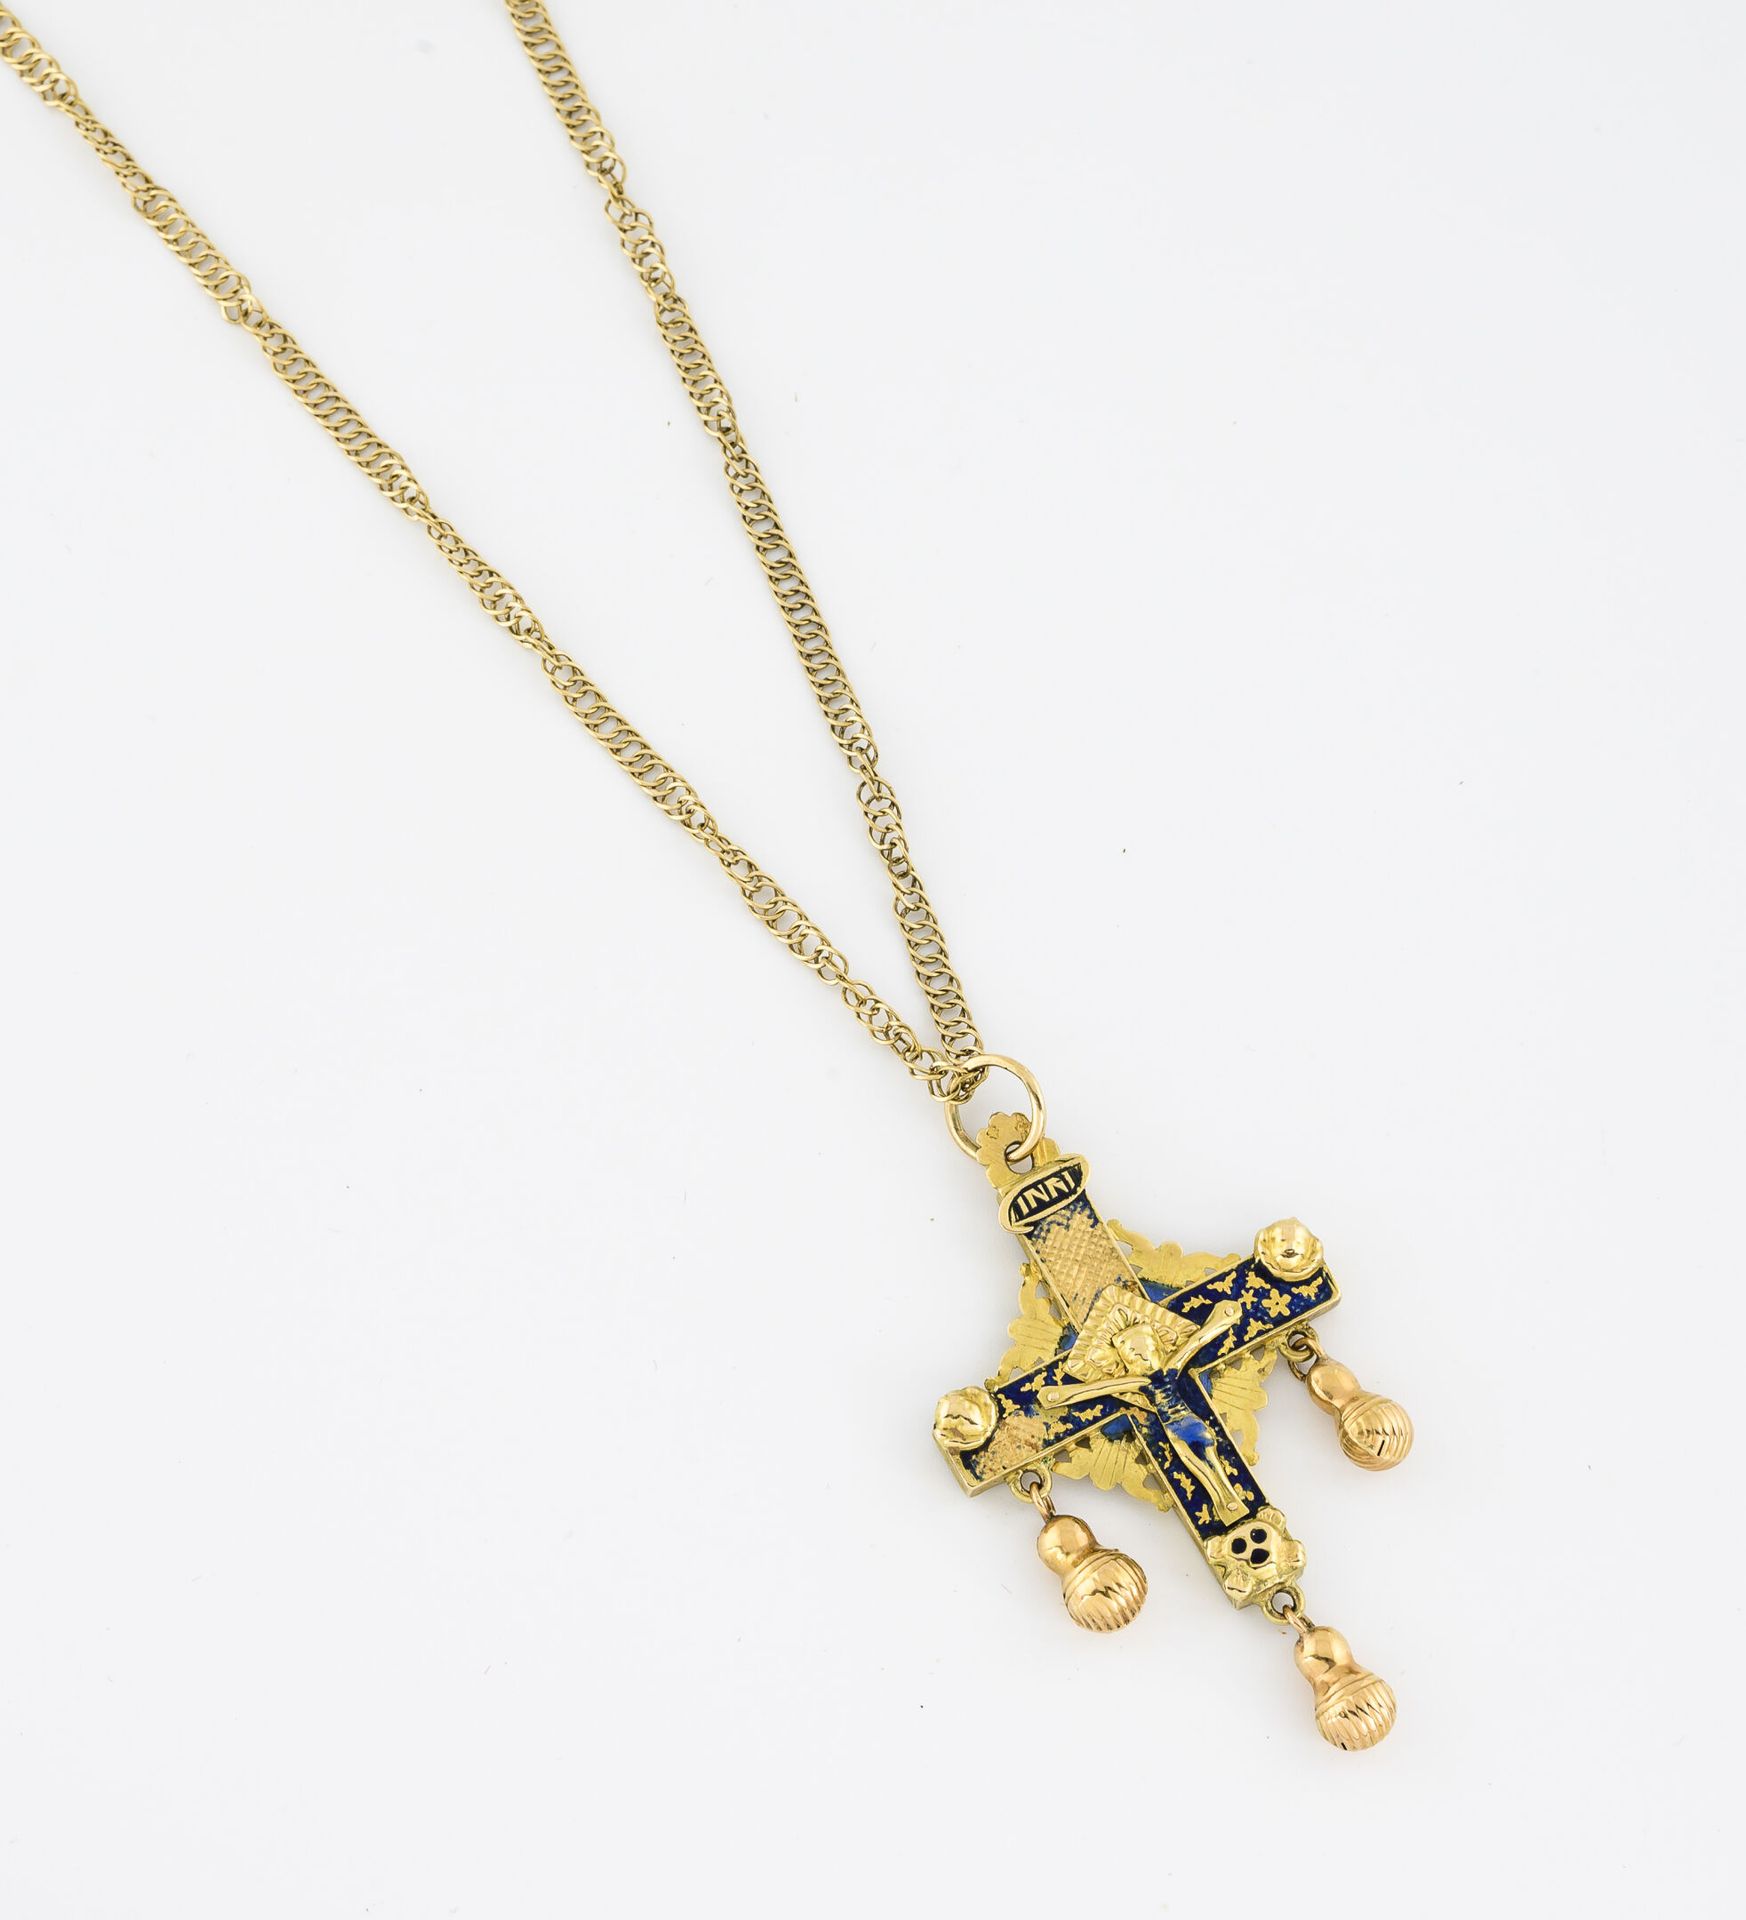 Null 黄金(750)链条，上面有一个黄金(750)和多色珐琅的区域十字架，上面有凸起的区域。

弹簧环扣。

十字架上有金匠的印记[E.P.]和1809-1&hellip;